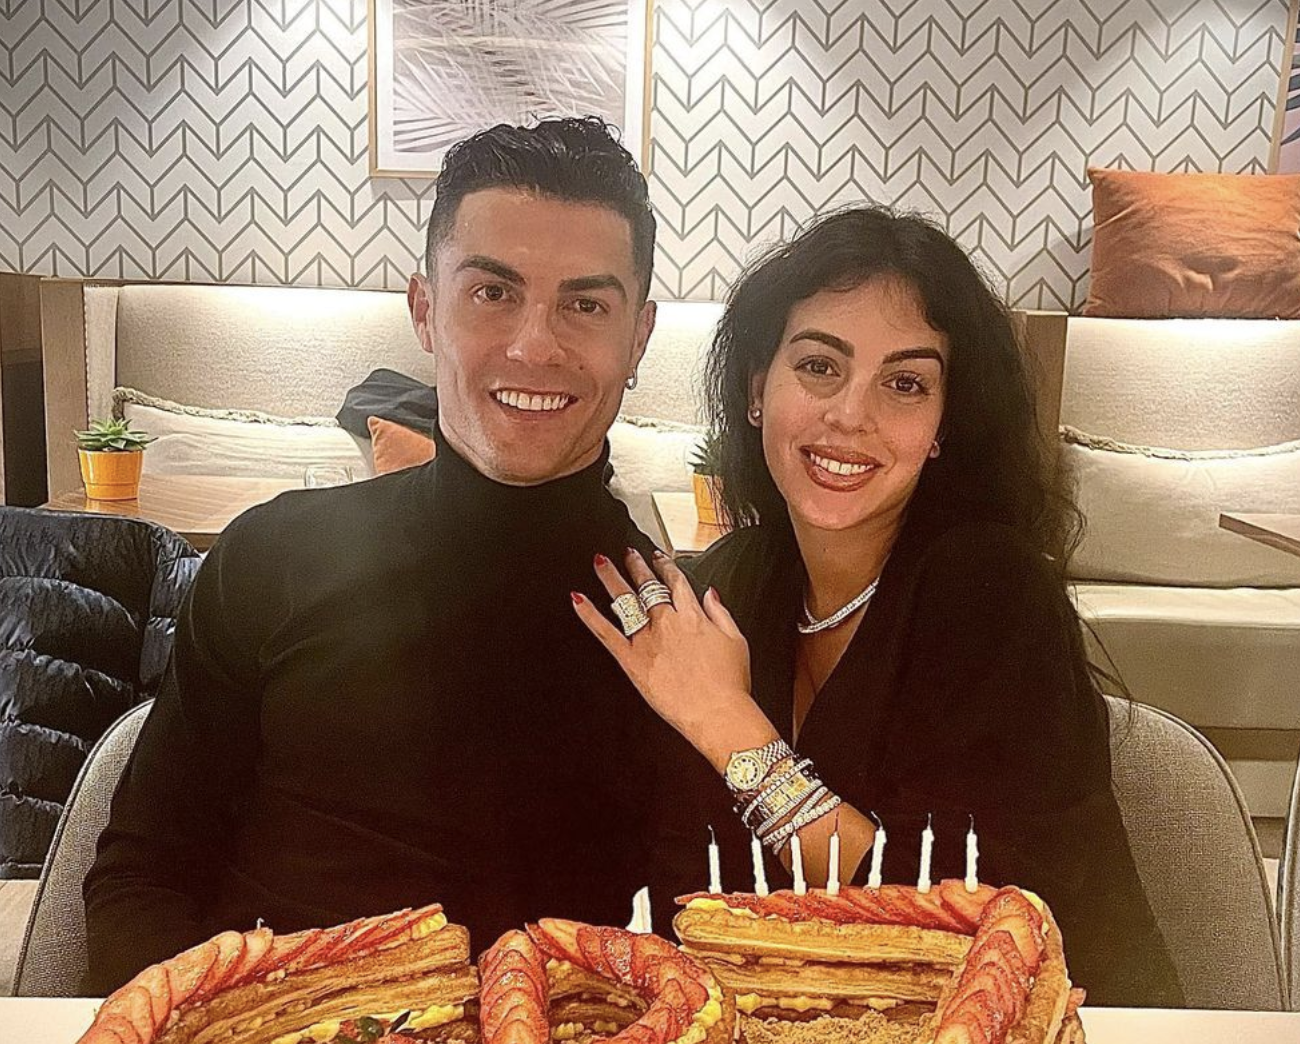 Cristiano Ronaldo, Georgina Rodriguez and mum Dolores eat out at